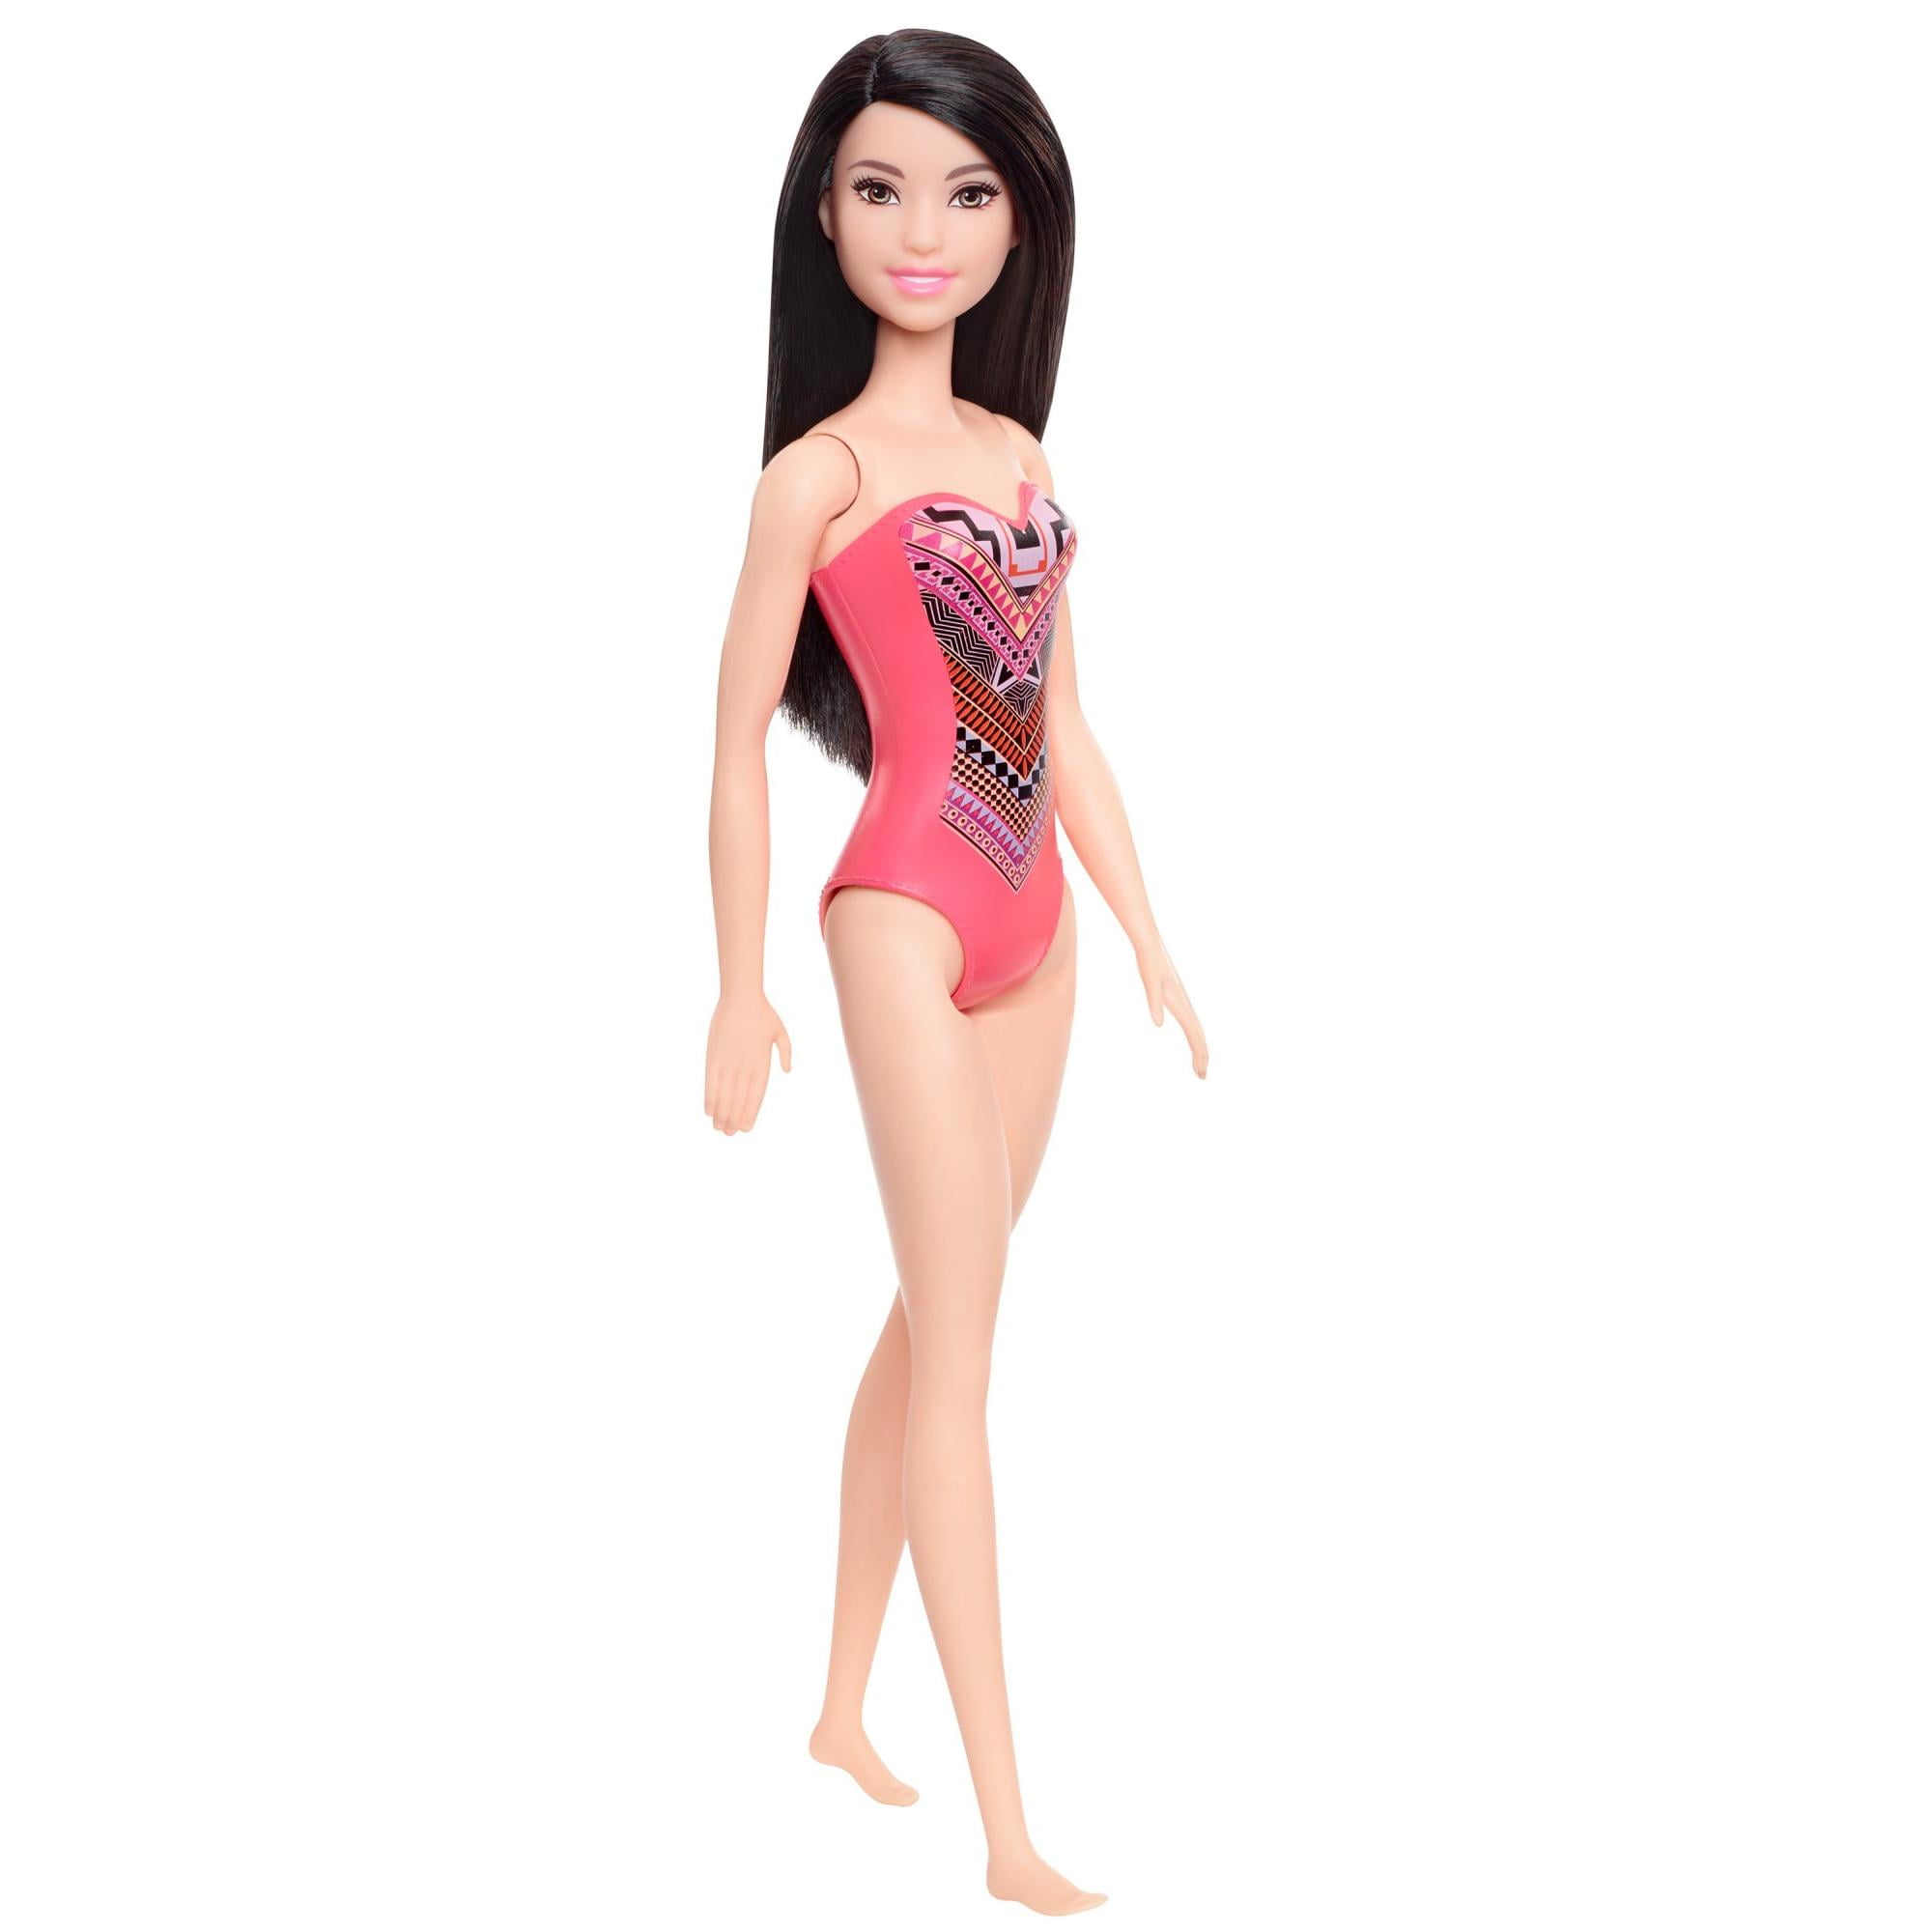 barbie swimsuit